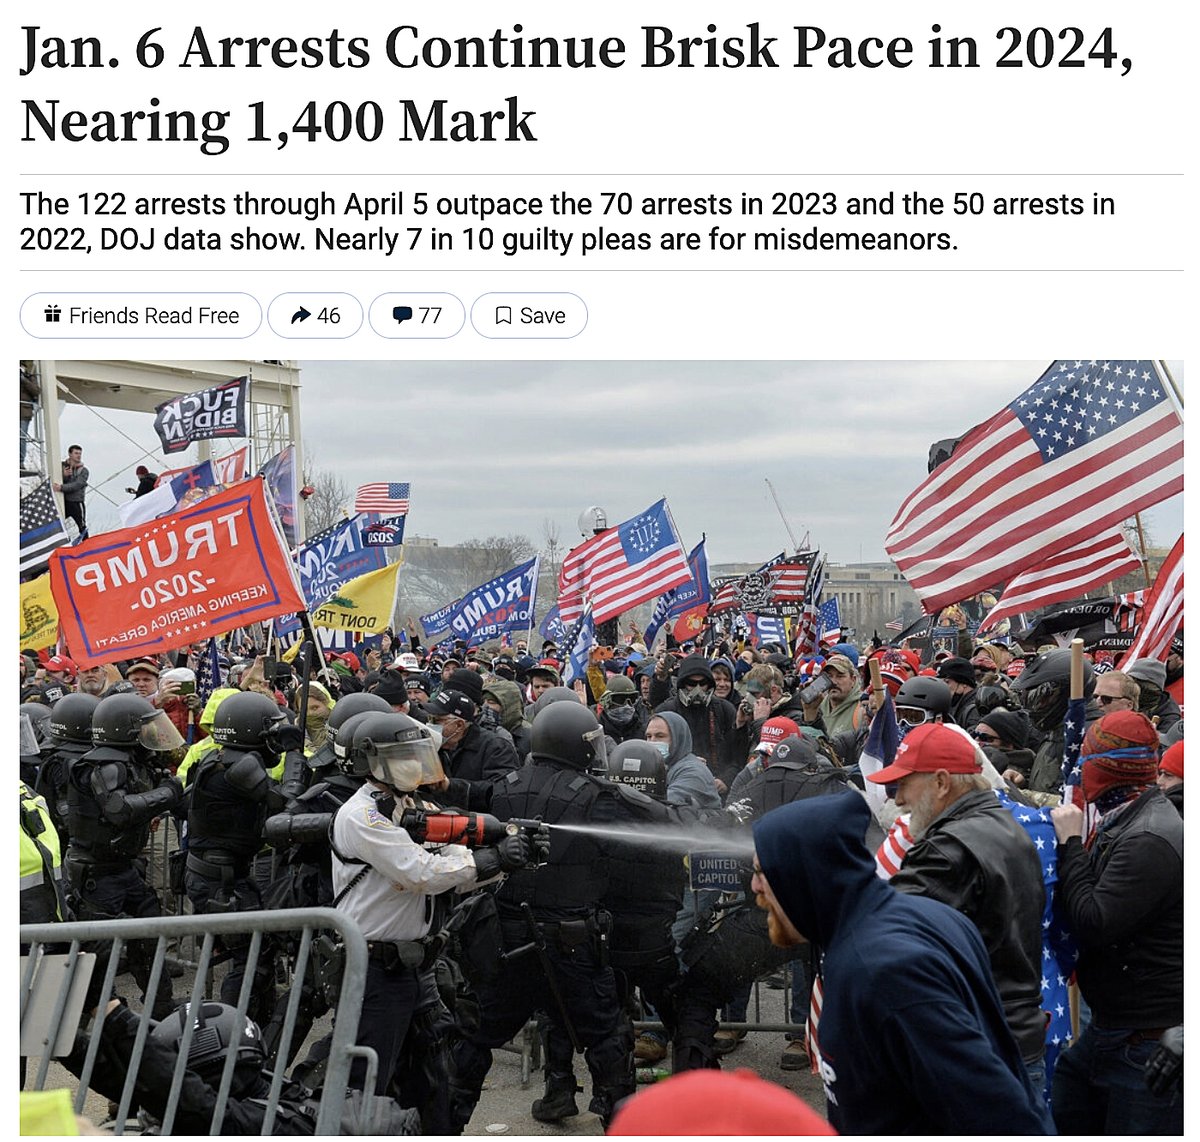 .#Jan6 Arrests near 1,400 mark, continuing brisk pace. theepochtimes.com/us/jan-6-arres…